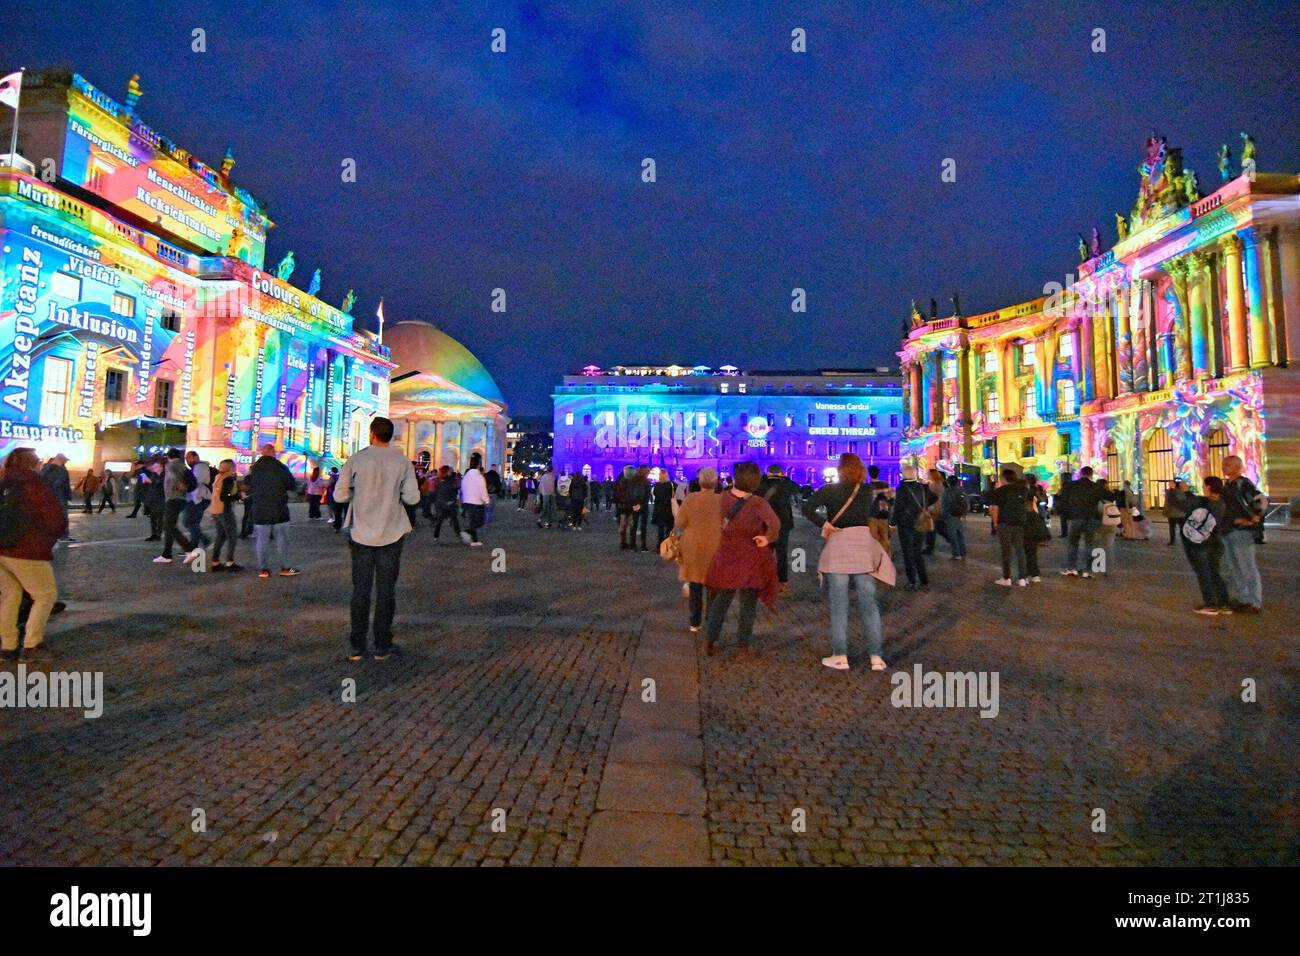 Berlin im Farbenrausch am Bebelplatz *** Berlin in a frenzy of color at Bebelplatz Credit: Imago/Alamy Live News Stock Photo